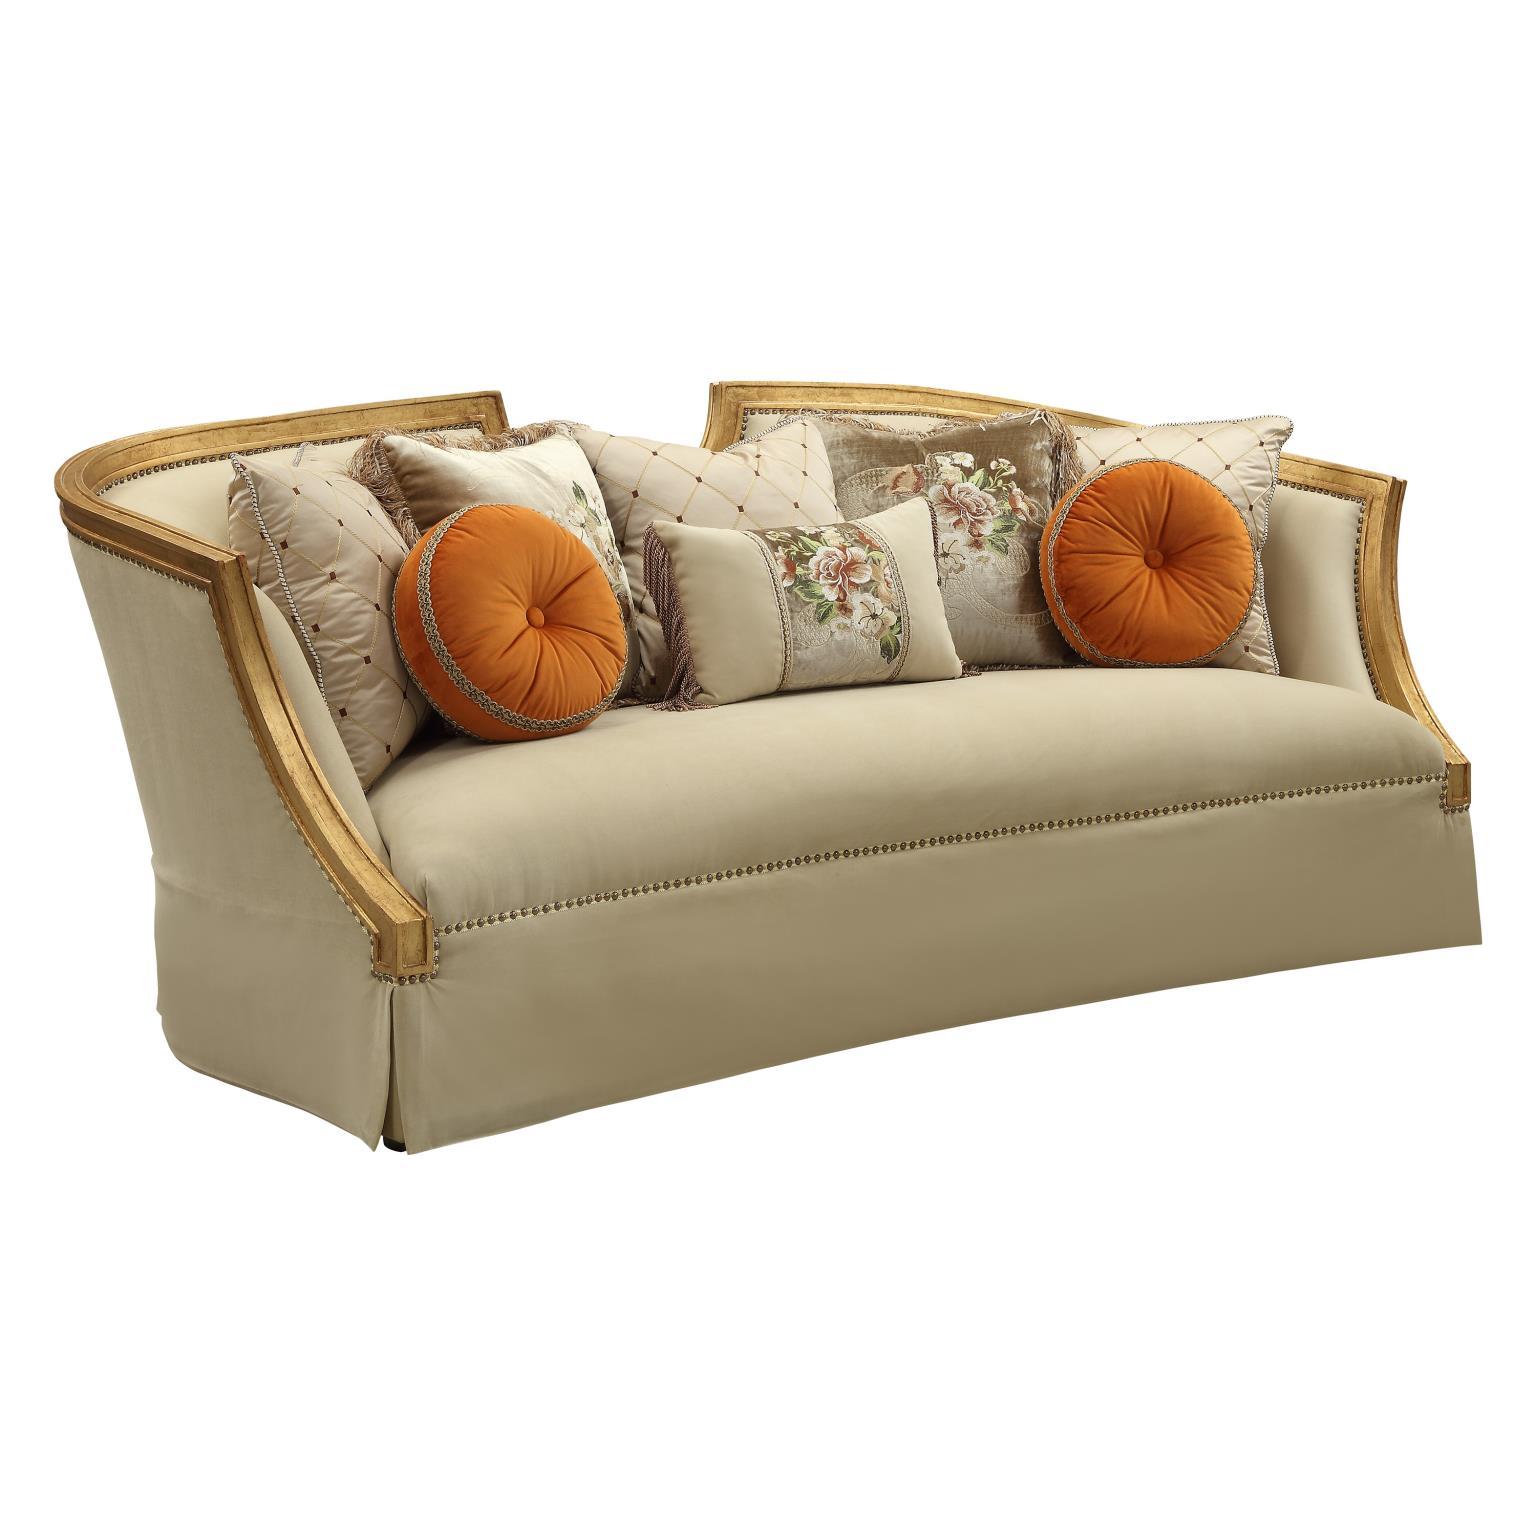 Classic, Traditional Sofa Daesha 50835 50835-Daesha in Tan, Gold Fabric